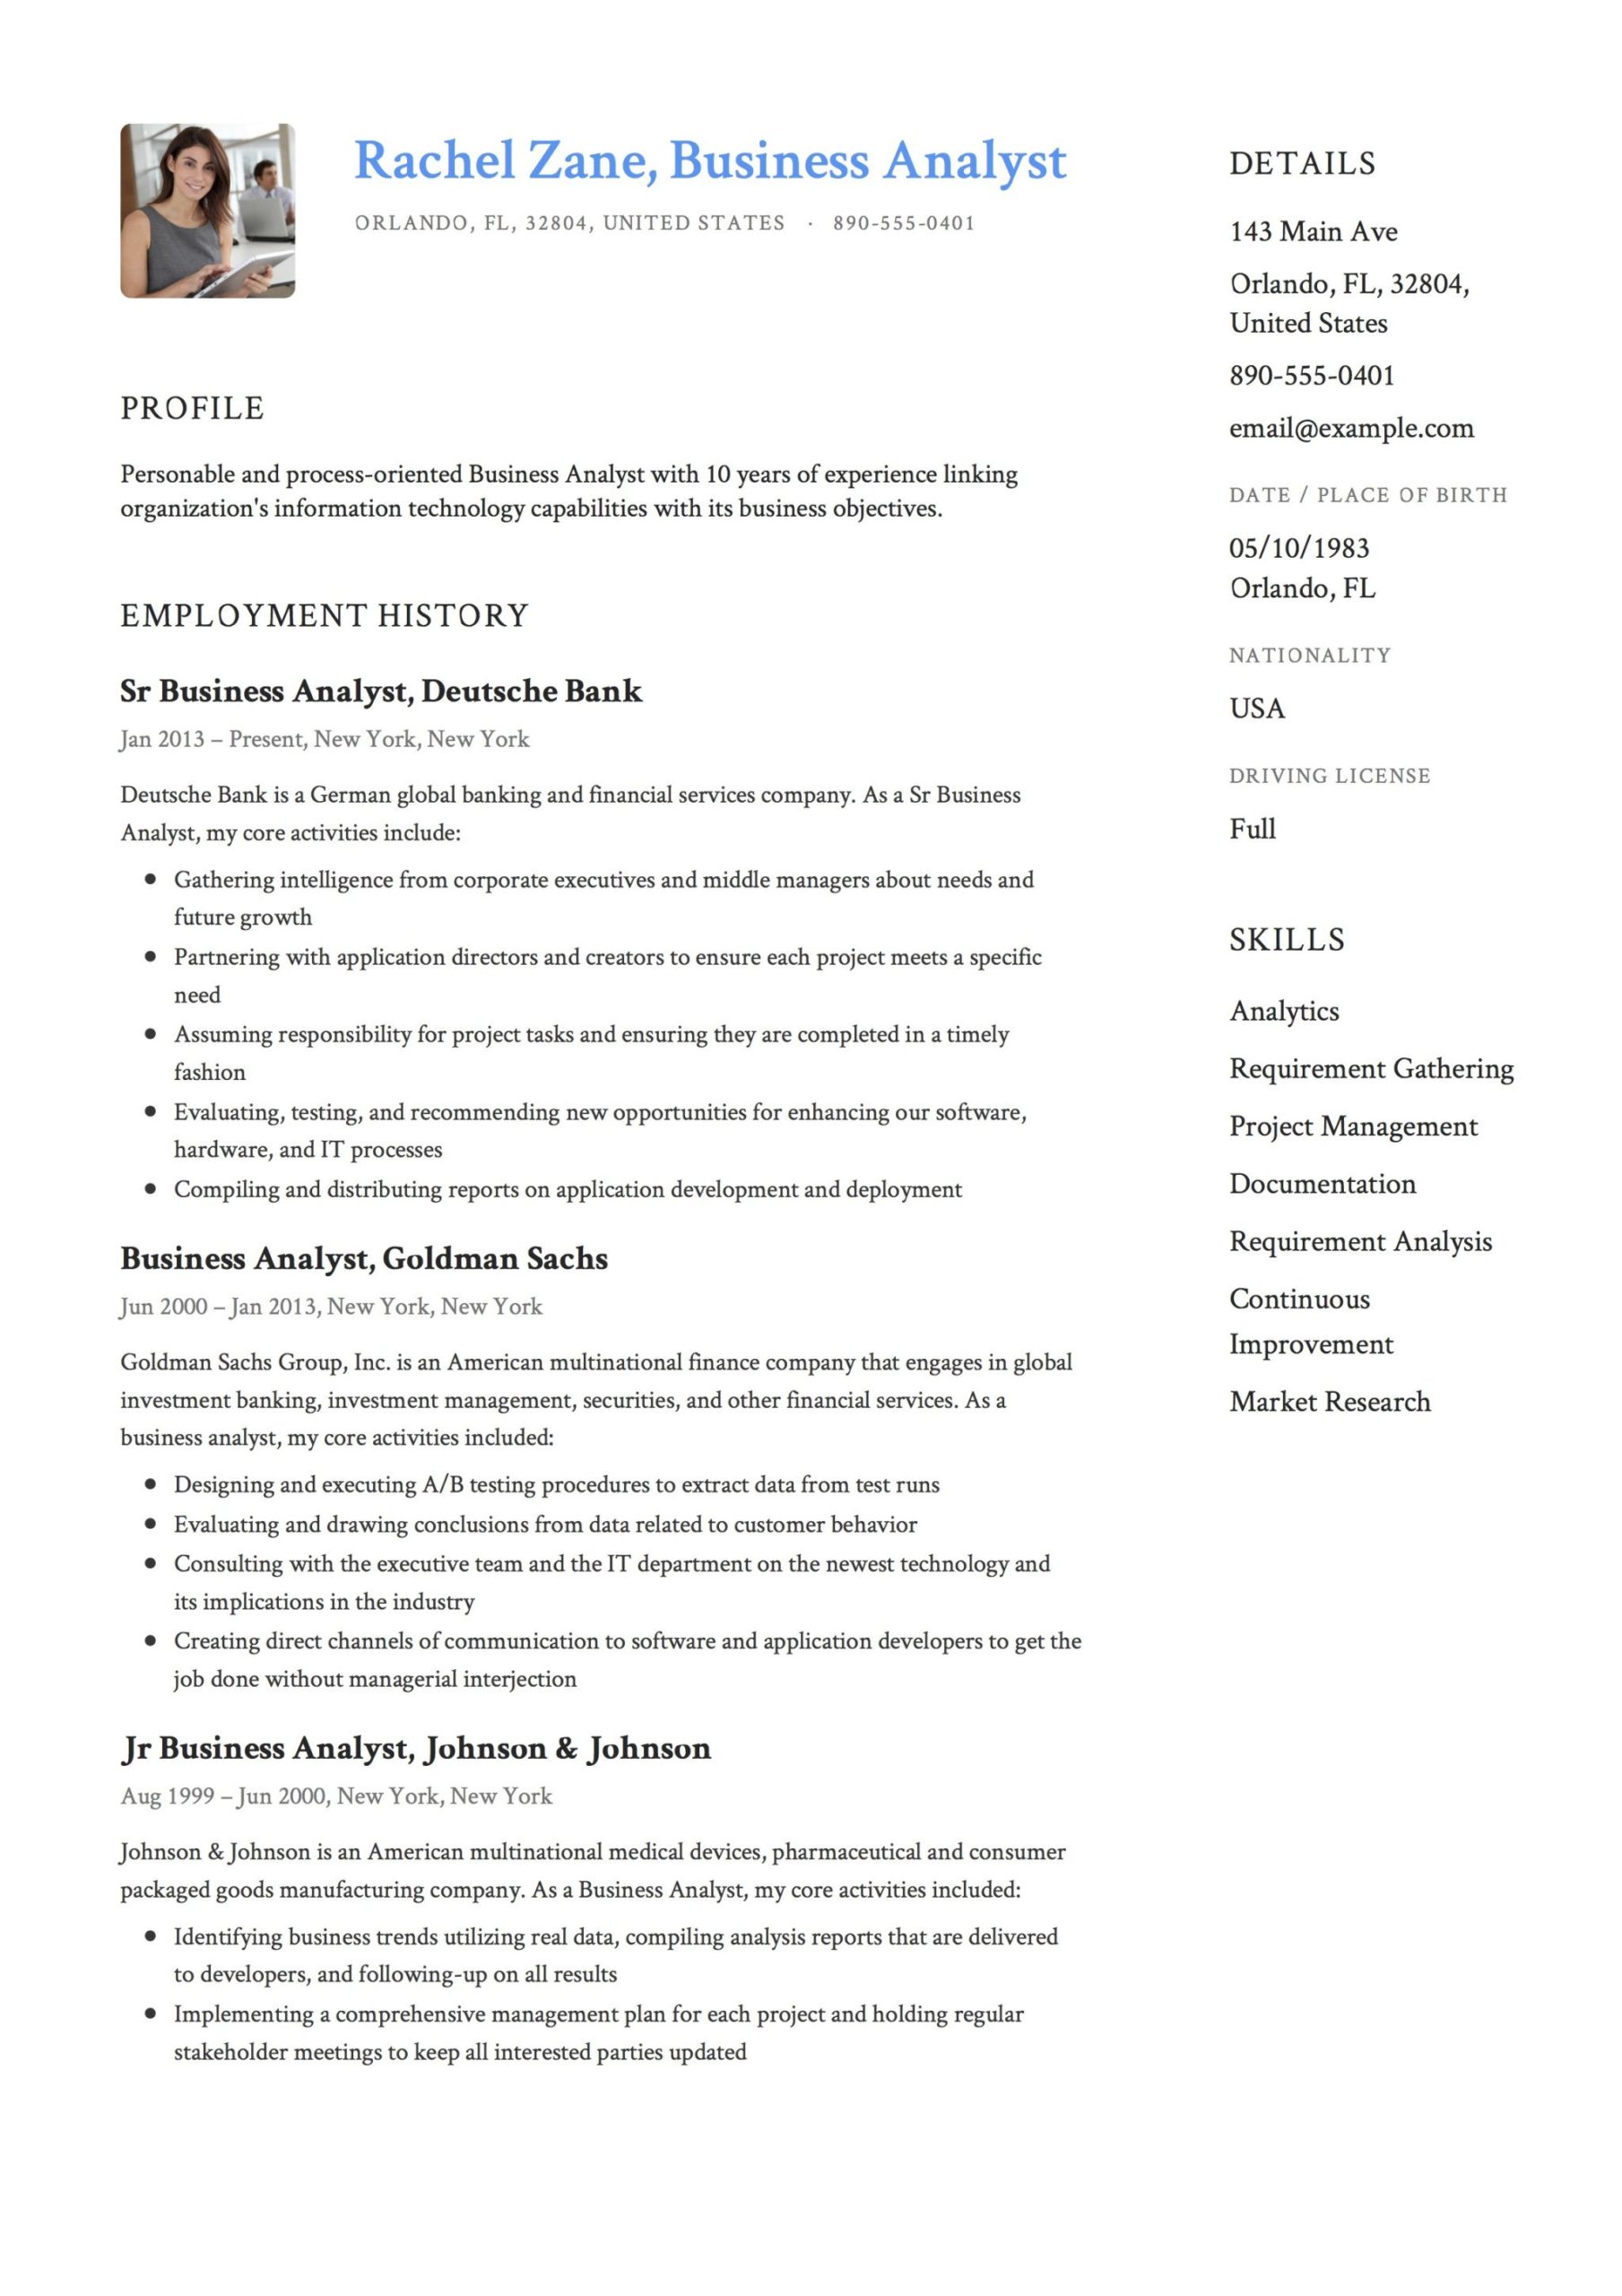 Senior Business Analyst Resume Sample On Market Business Analyst Resume Examples & Writing Guide 2022